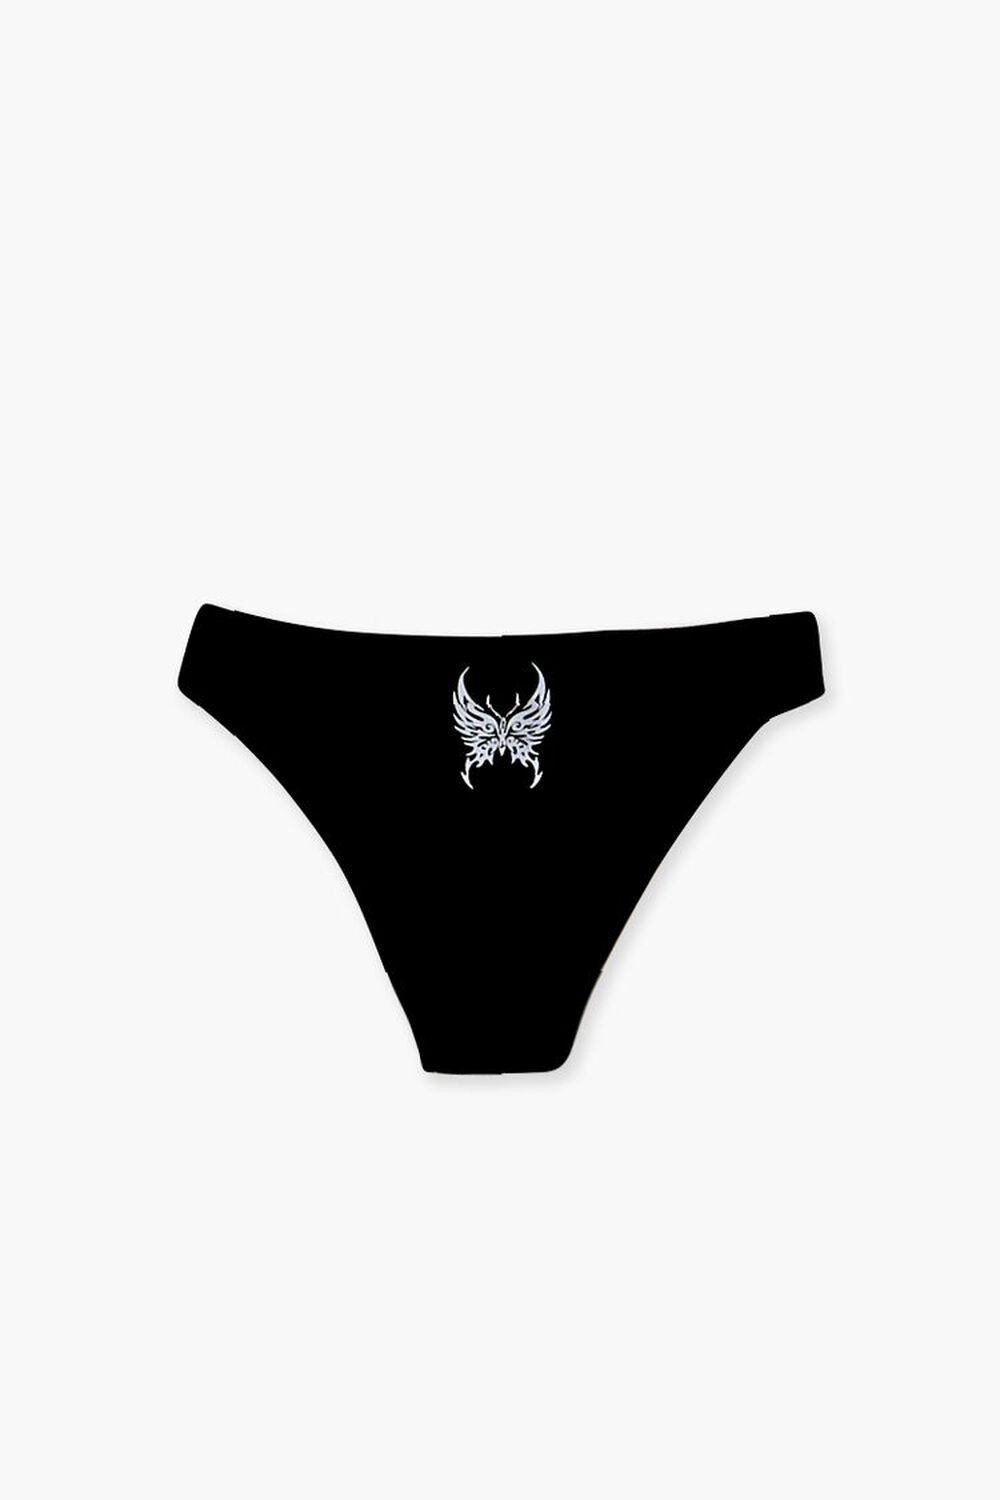 BLACK/MULTI Bow Panties Set - 3 Pack, image 3